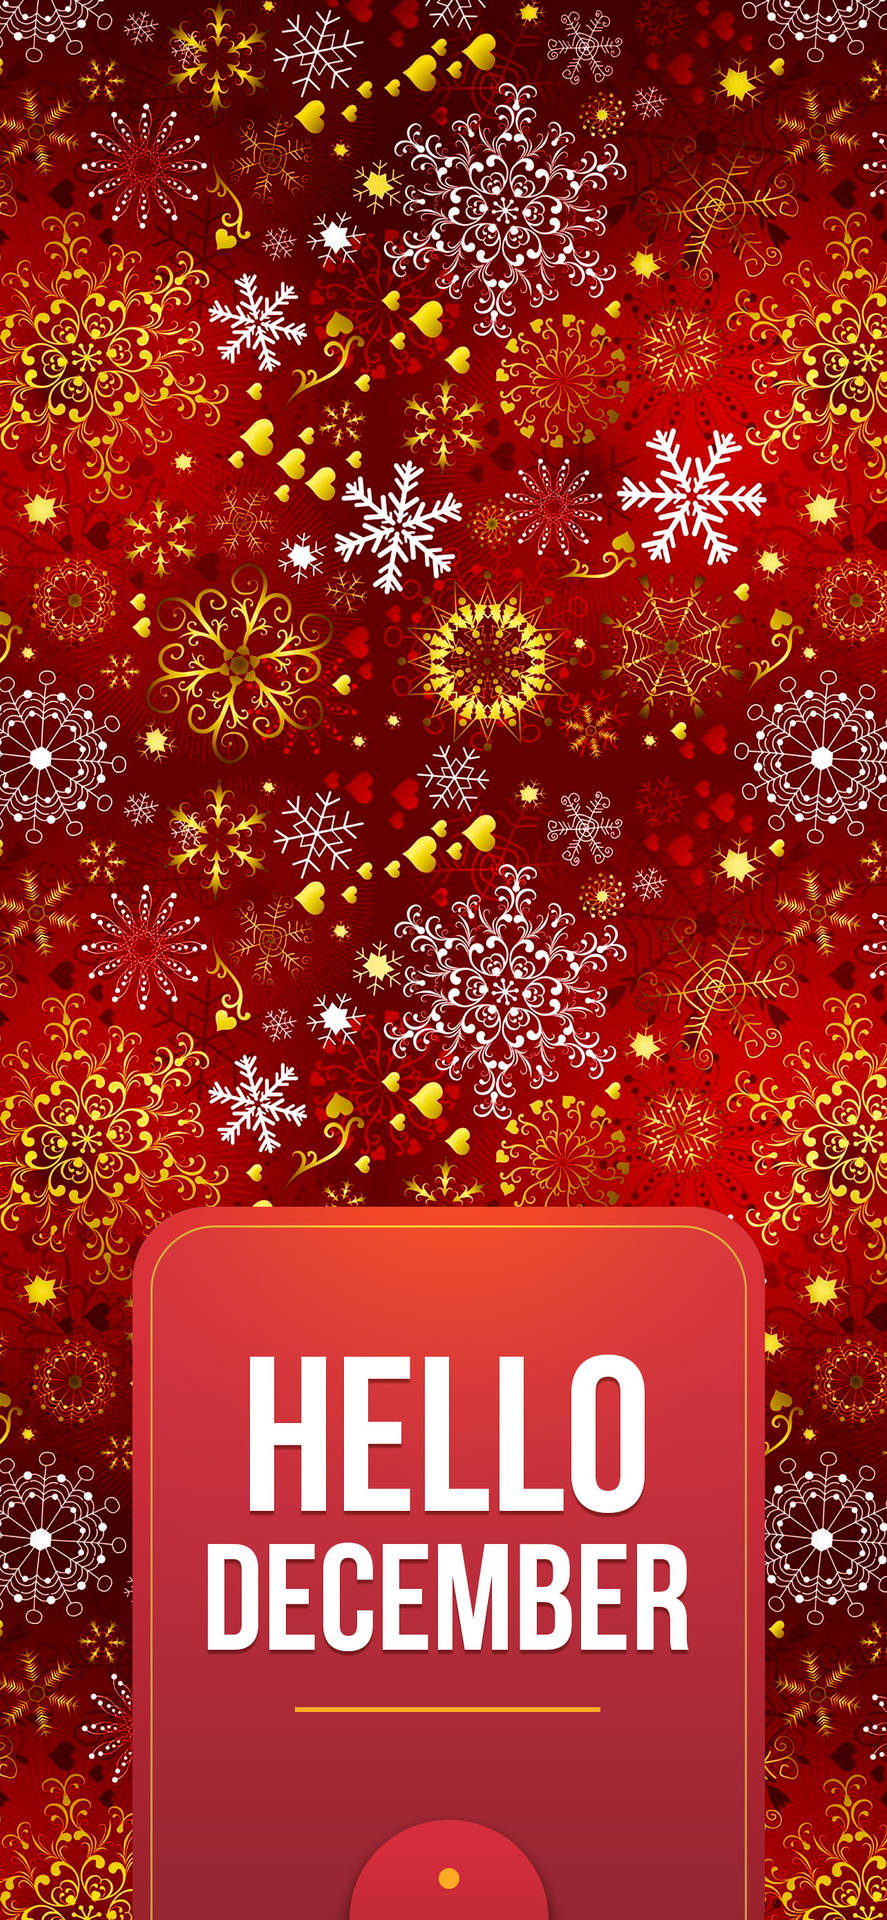 Festive Red December Background